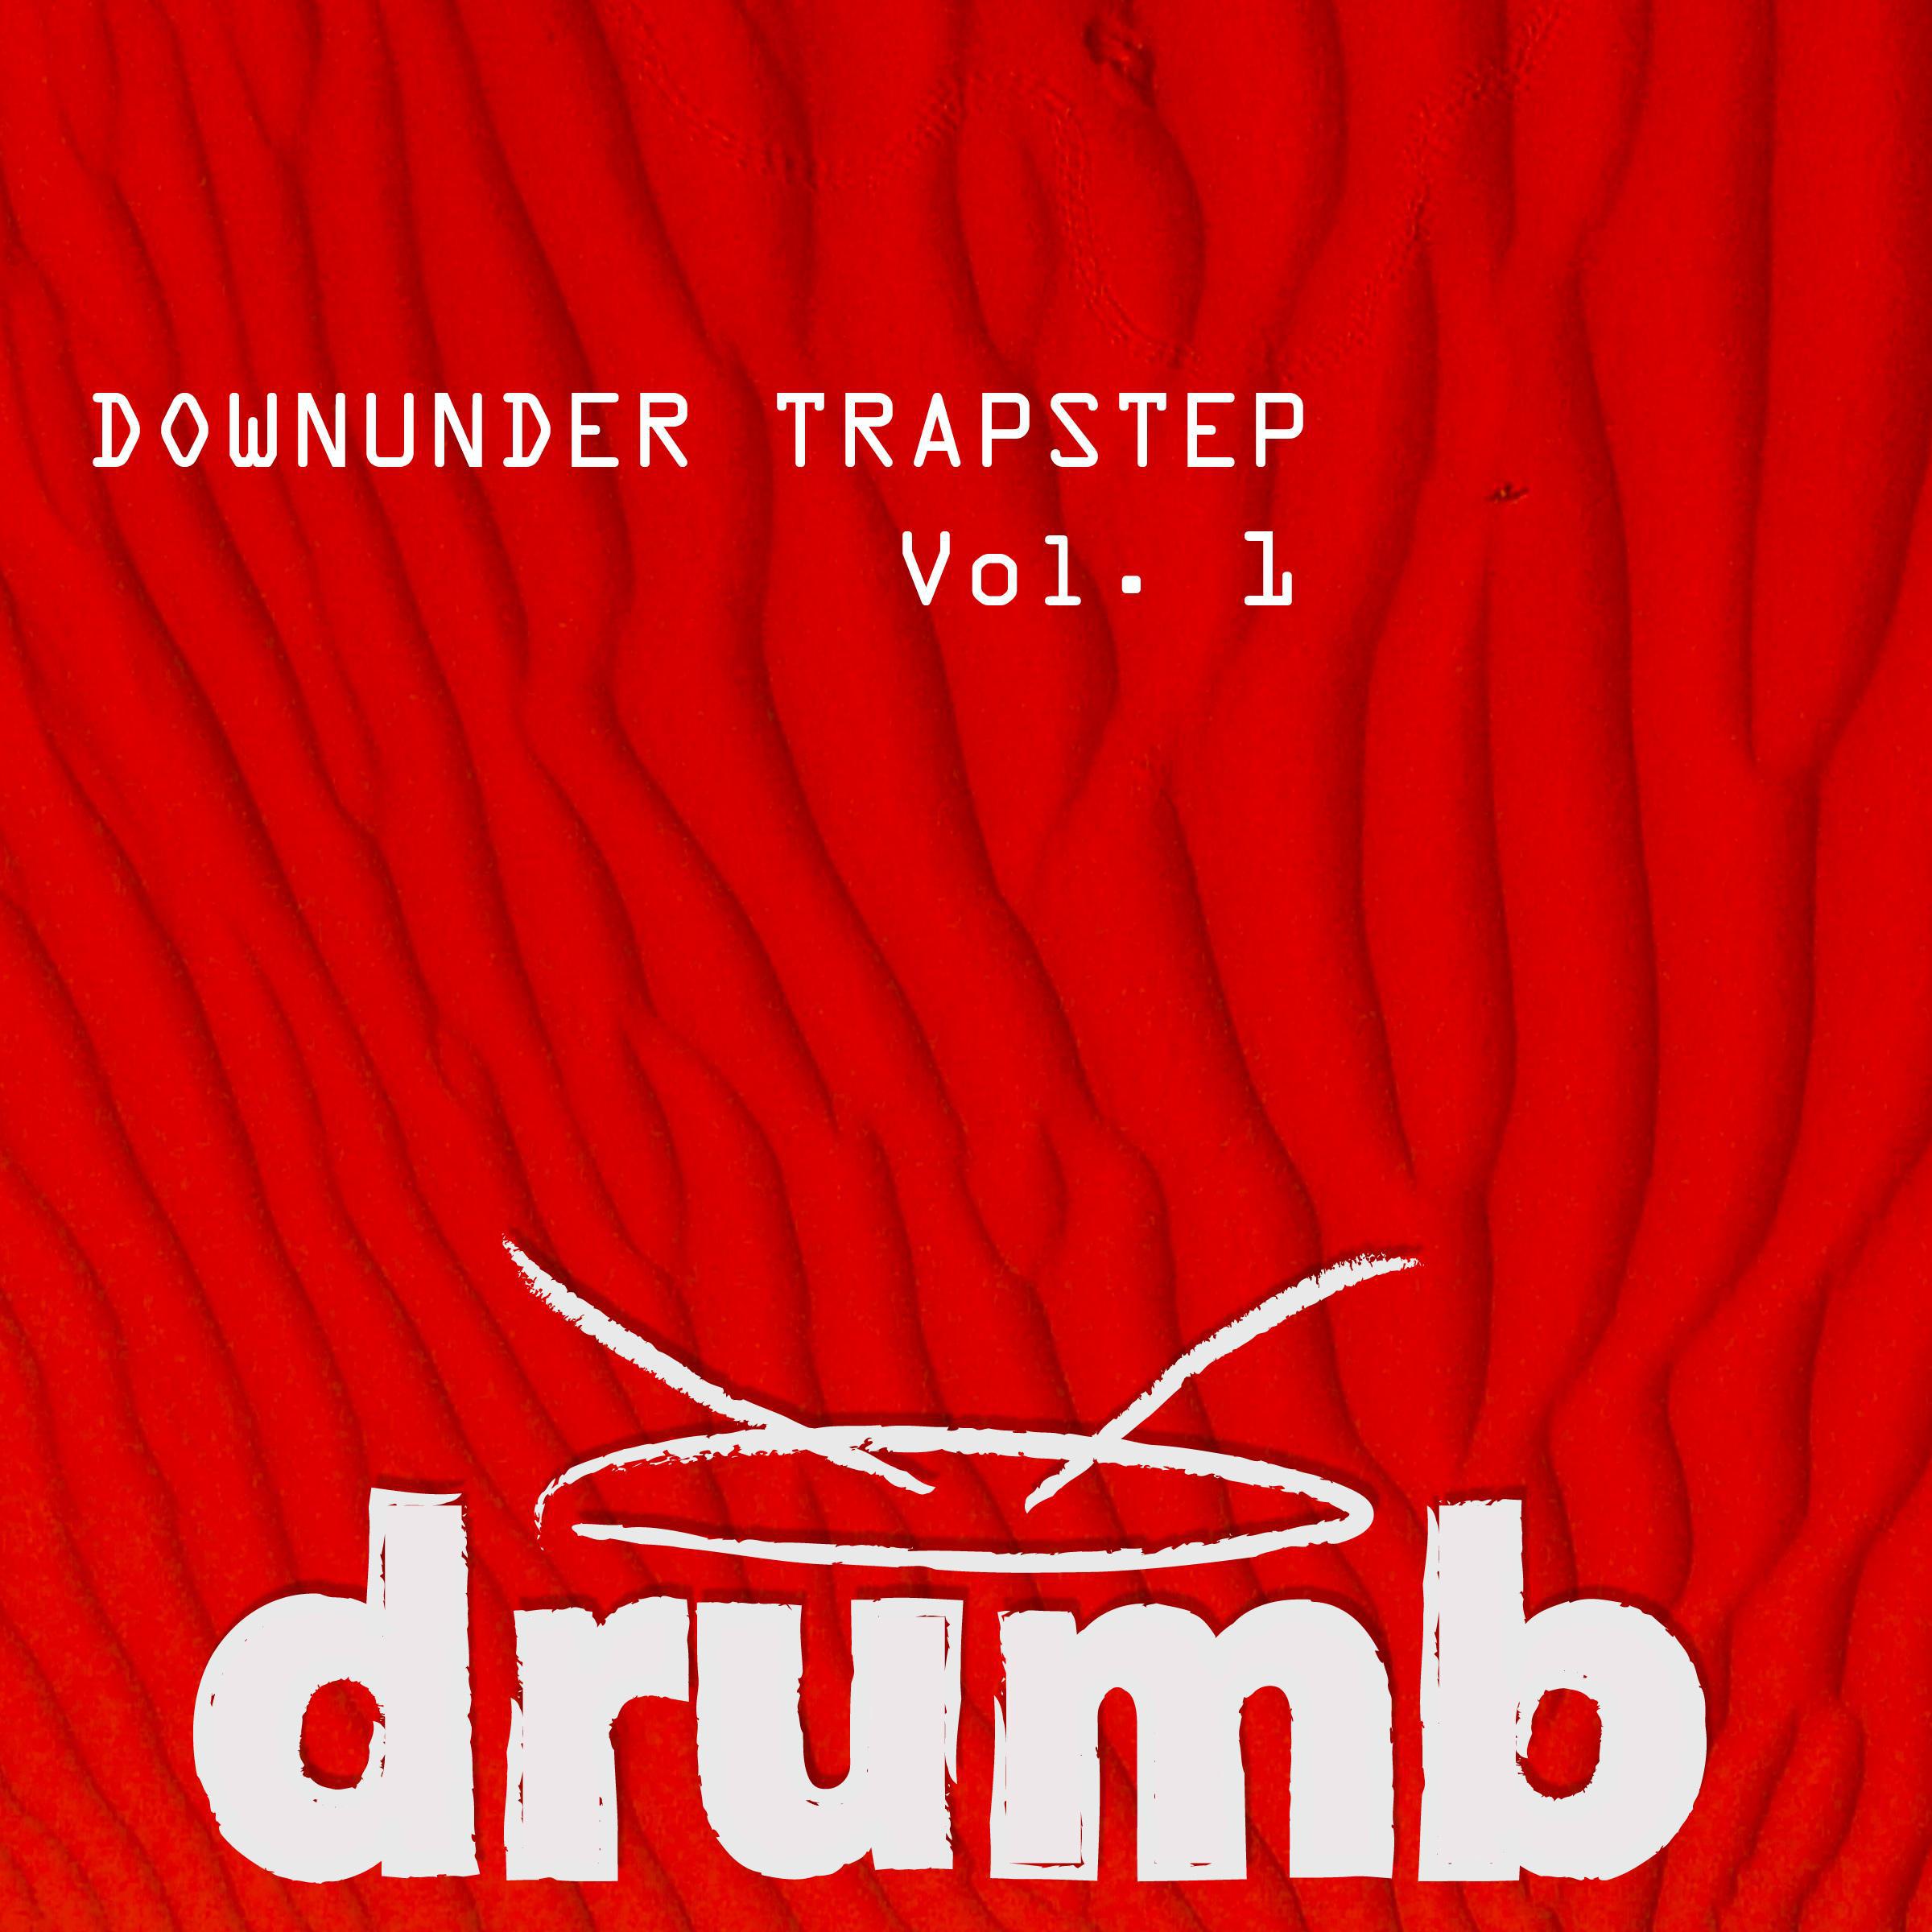 Downunder Trapstep, Vol. 1